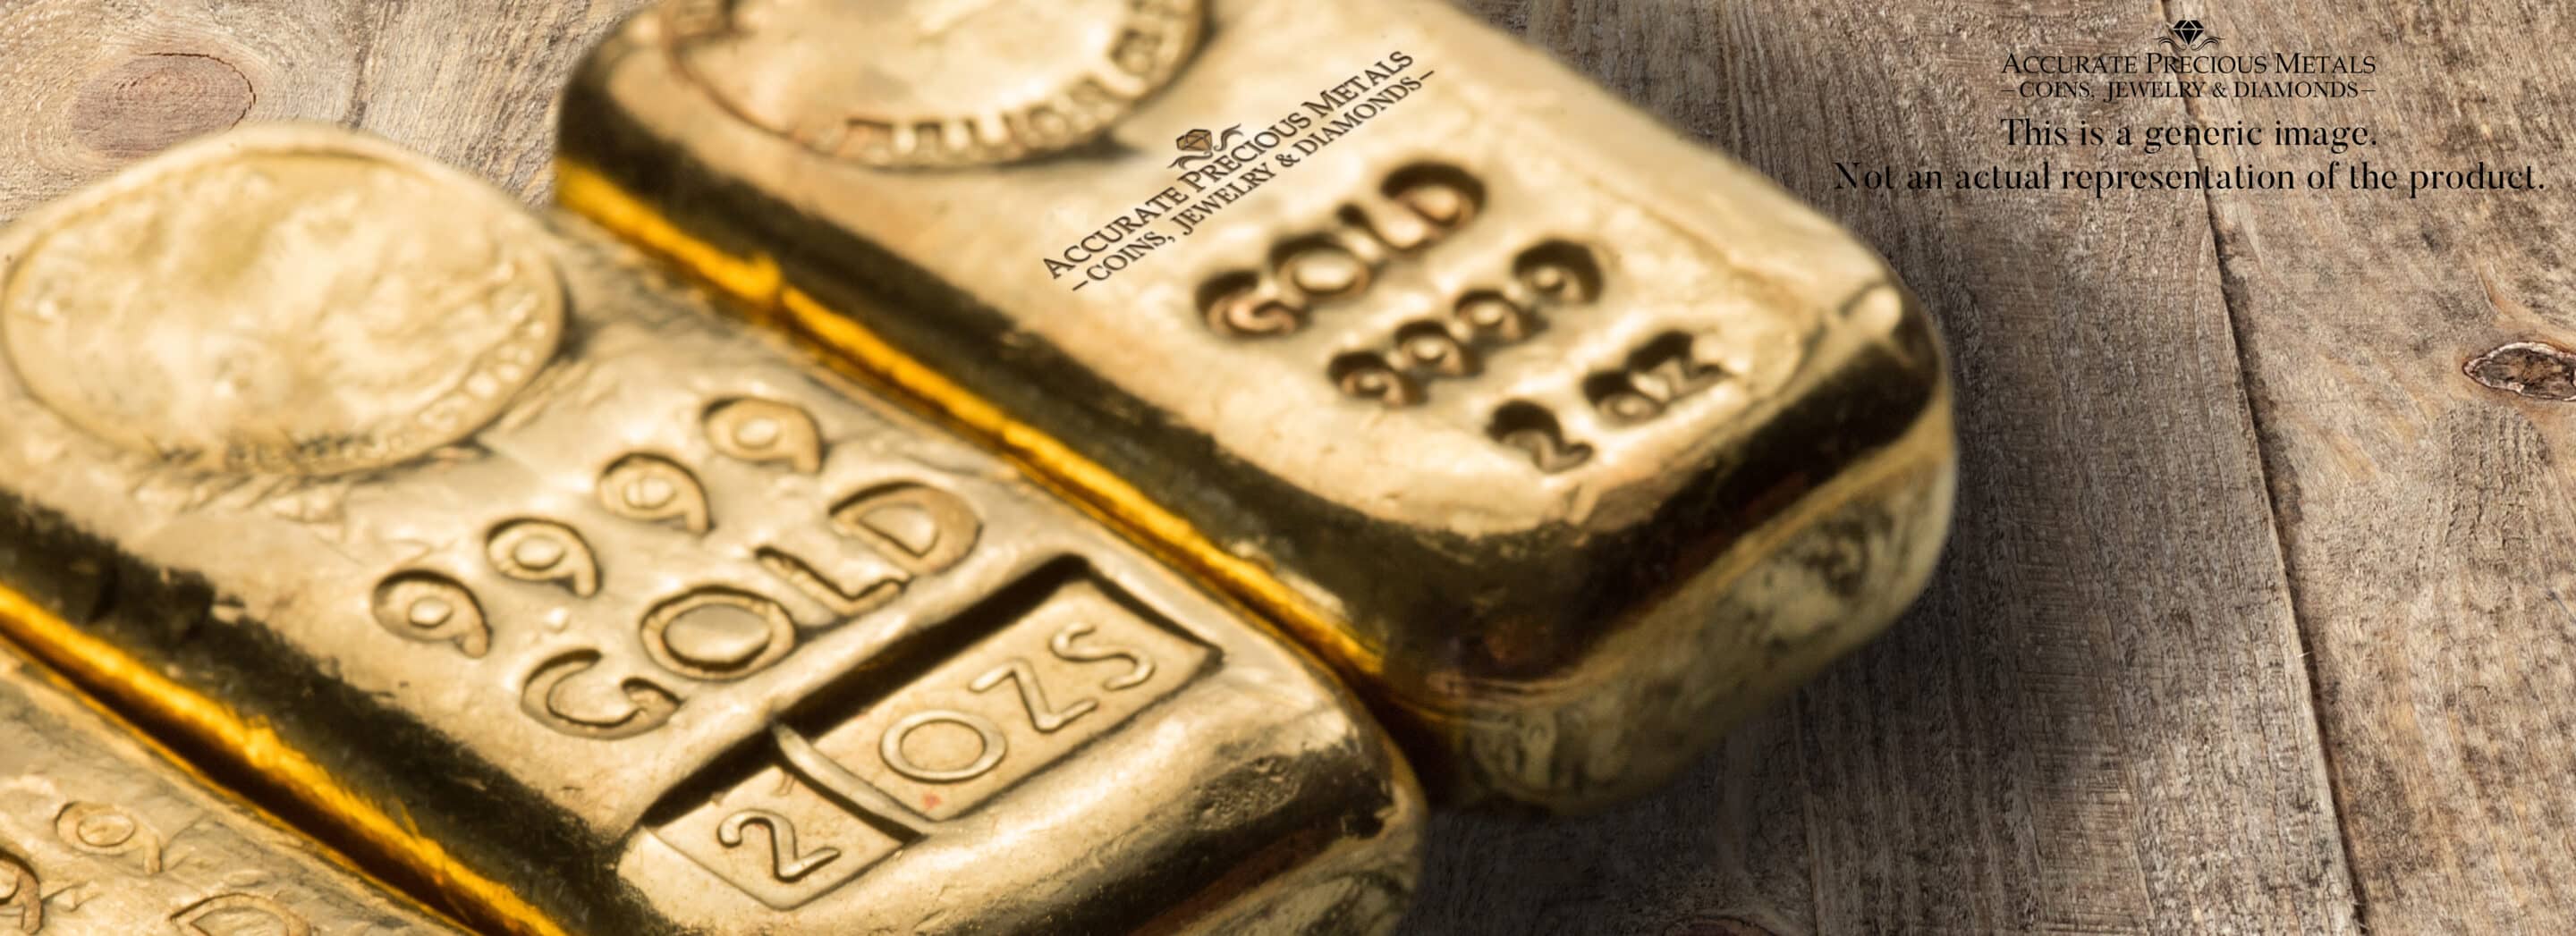 Shining Johnson Matthey 50g Gold Bar - Premium Investment Choice